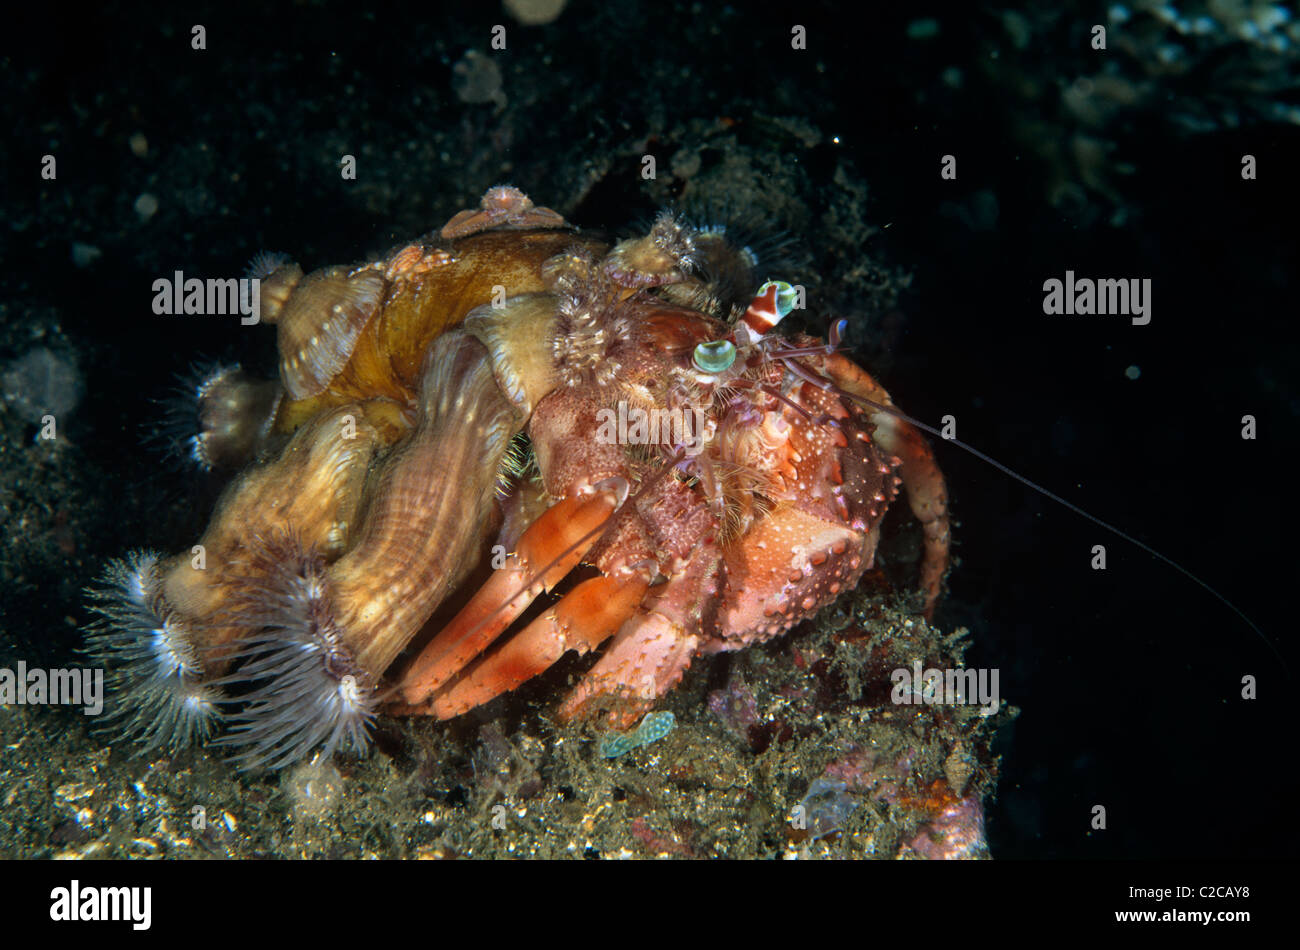 Anemone Hermit Crab, Dardanus pedunculatus, with Sea Anemones, Calliactis polypus, on shell, Lembeh Straits, near Bitung, Sulawesi, Indonesia, Asia Stock Photo